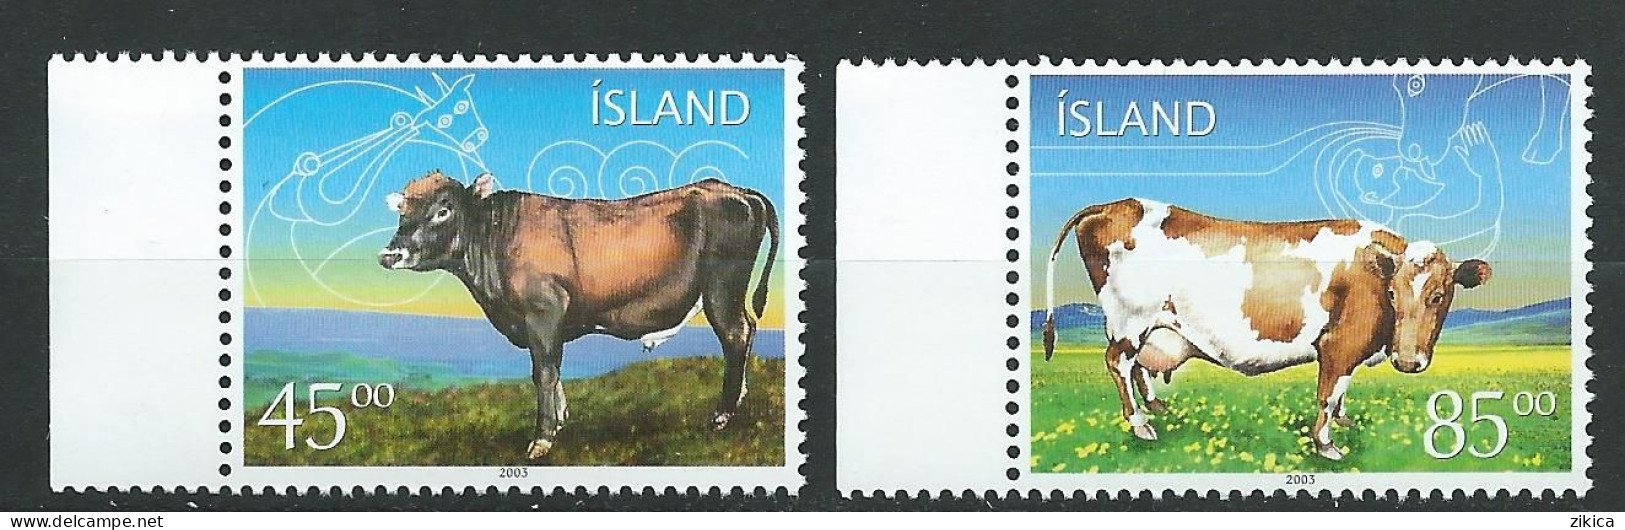 Iceland 2003 Icelandic Cattle MNH** - Unused Stamps